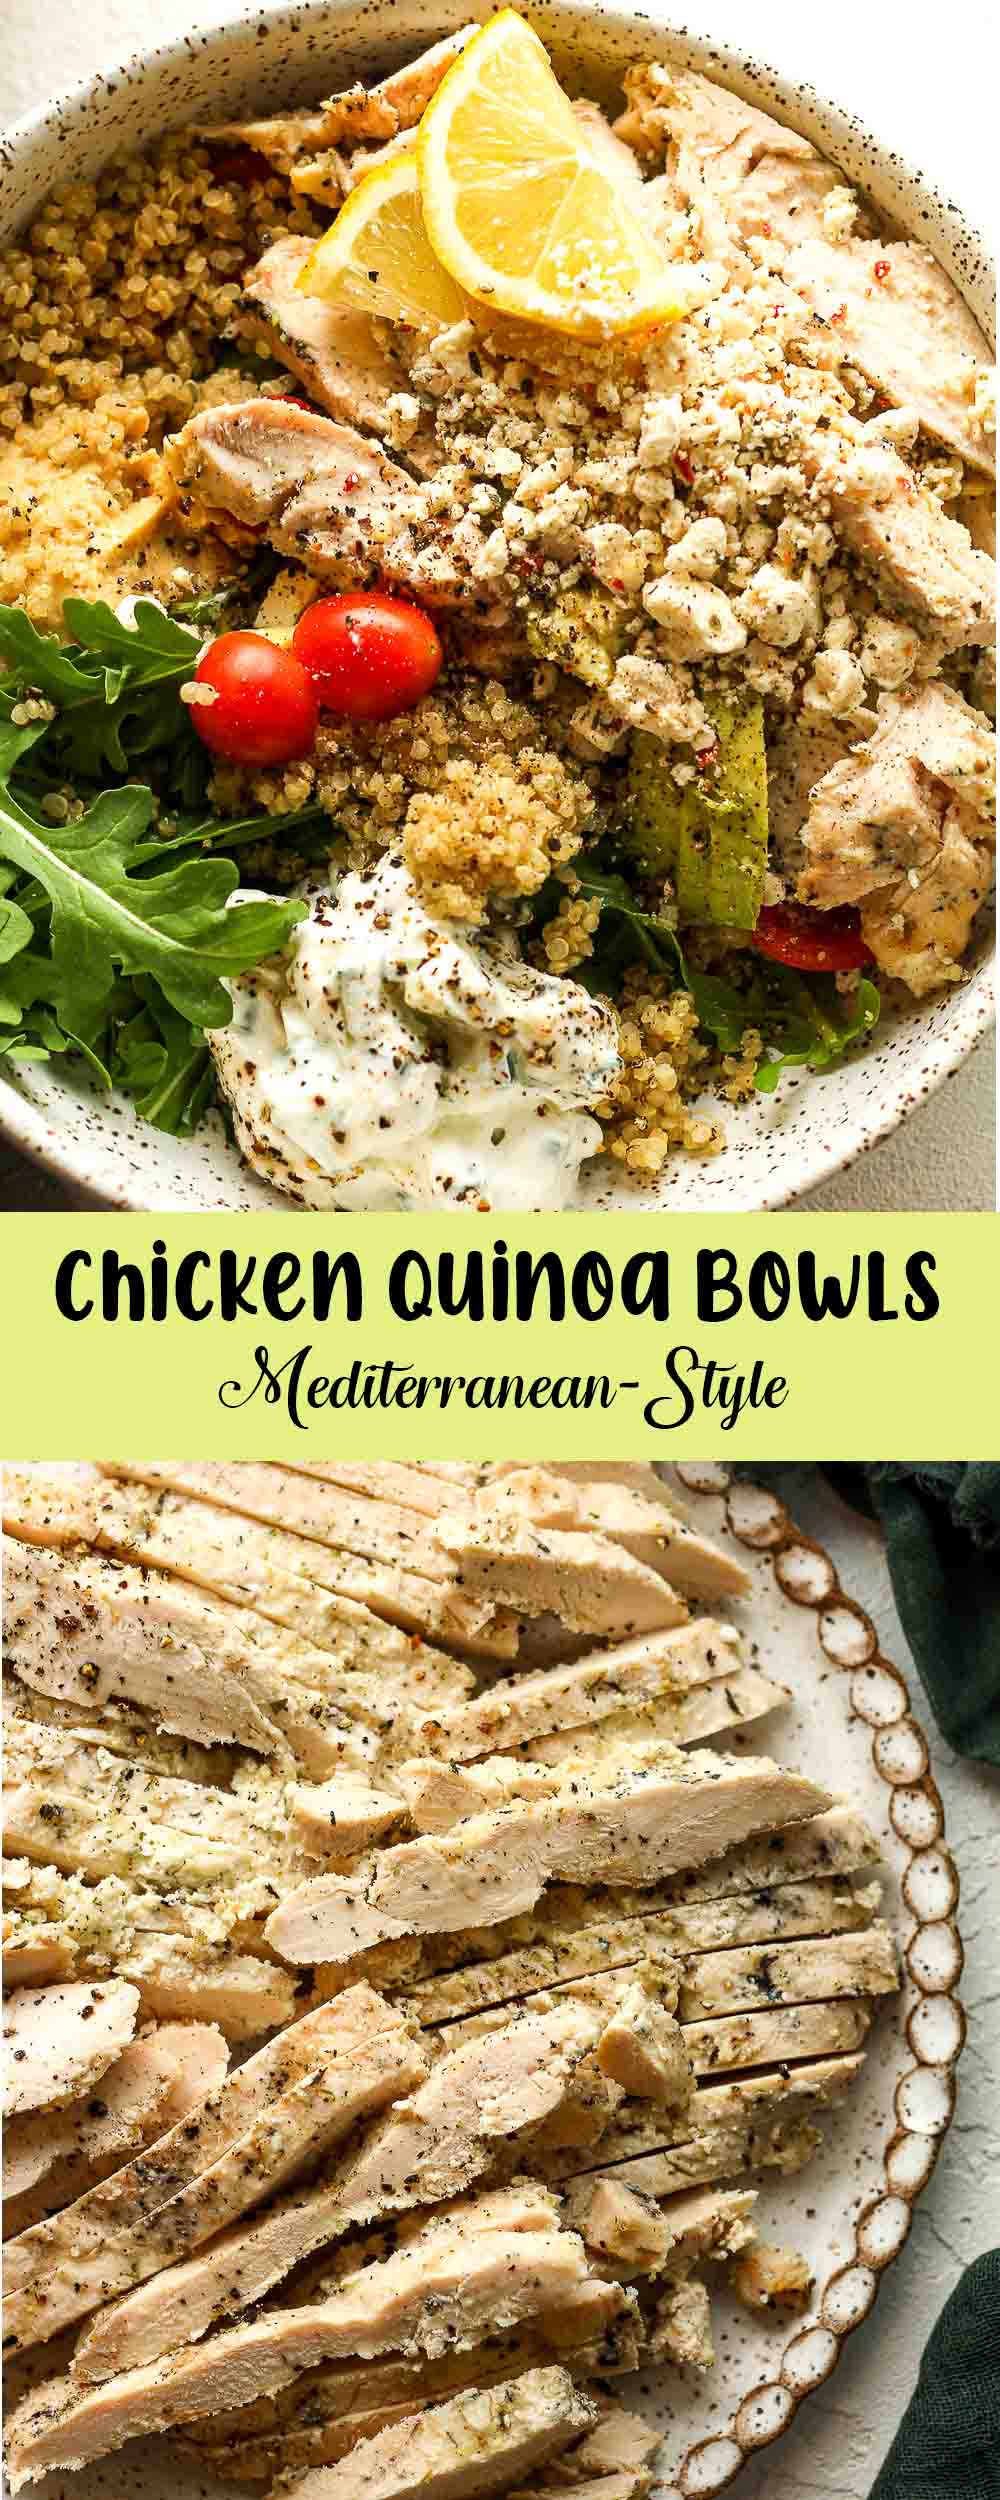 A collage of photos for Chicken Quinoa Bowls, Mediterranean-Style.